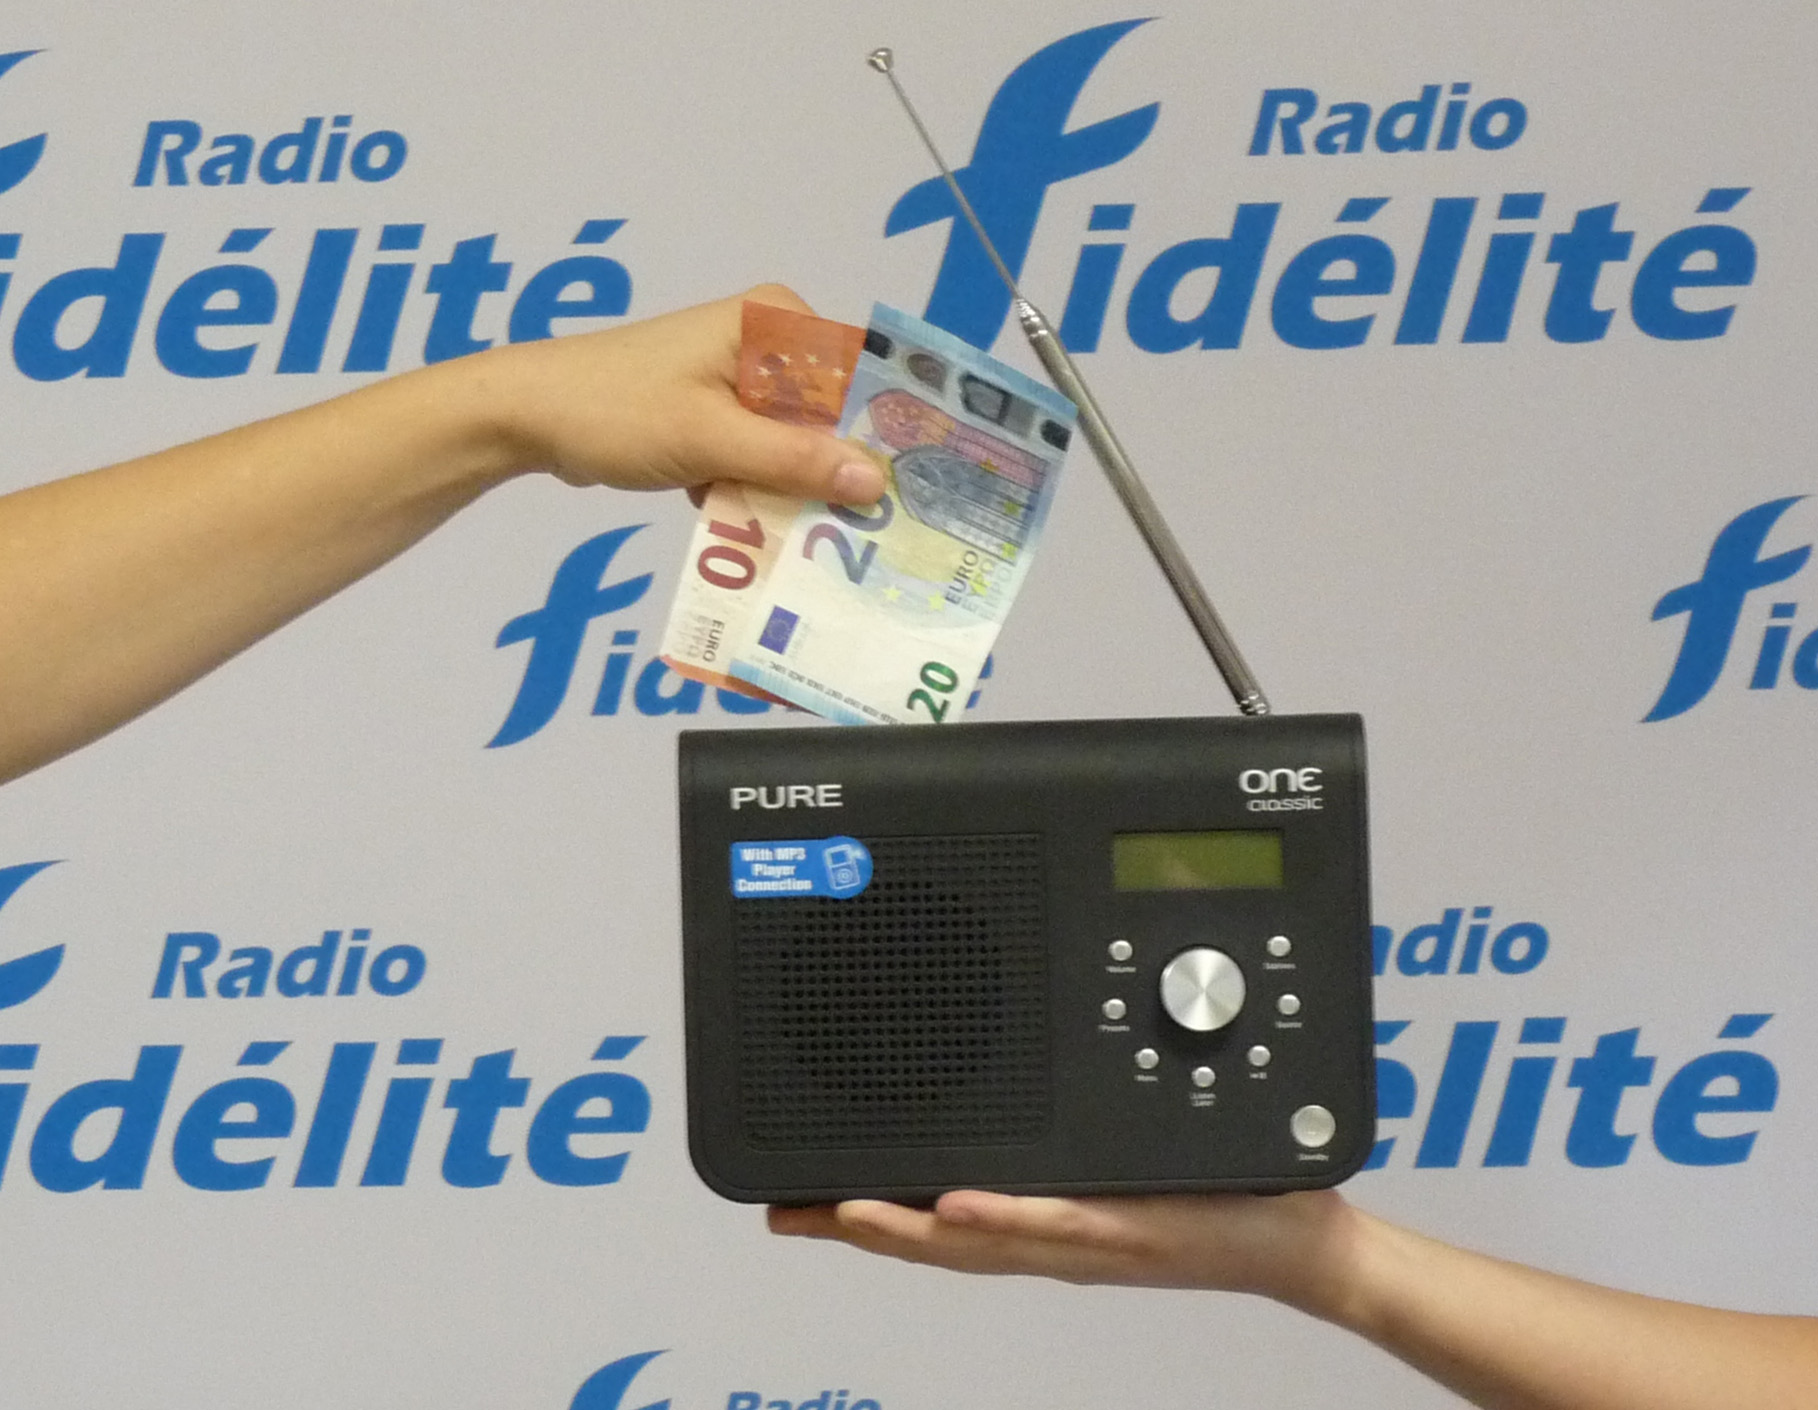 Radio Fidélité organise son 11e Radio Don